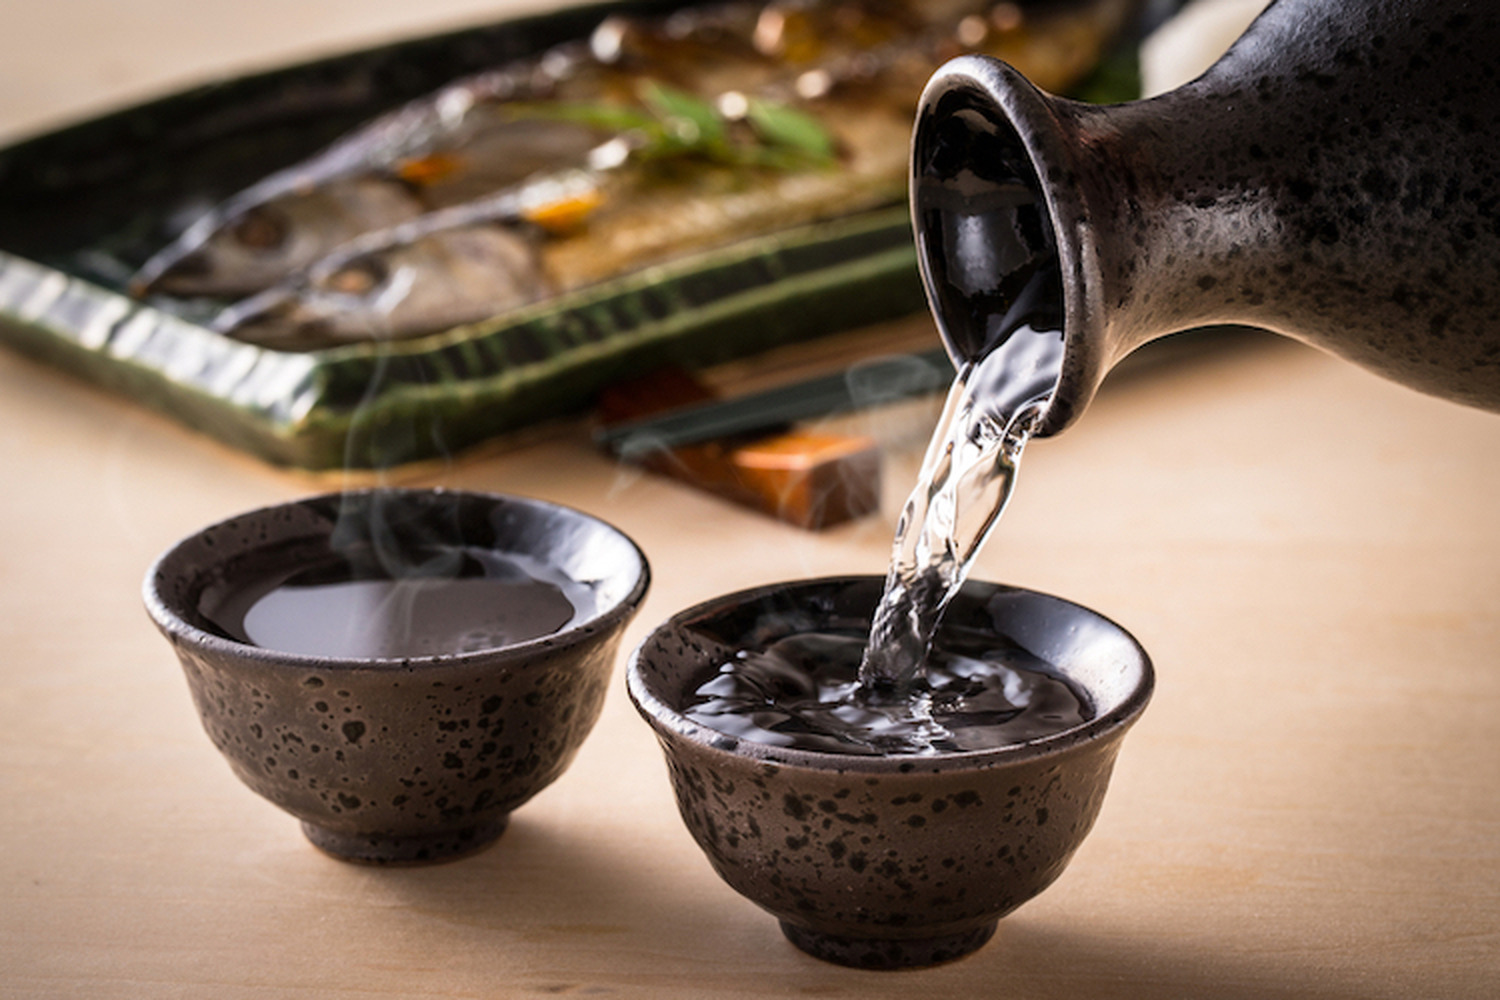 Japanese,Sake,And,Pacific,Saury